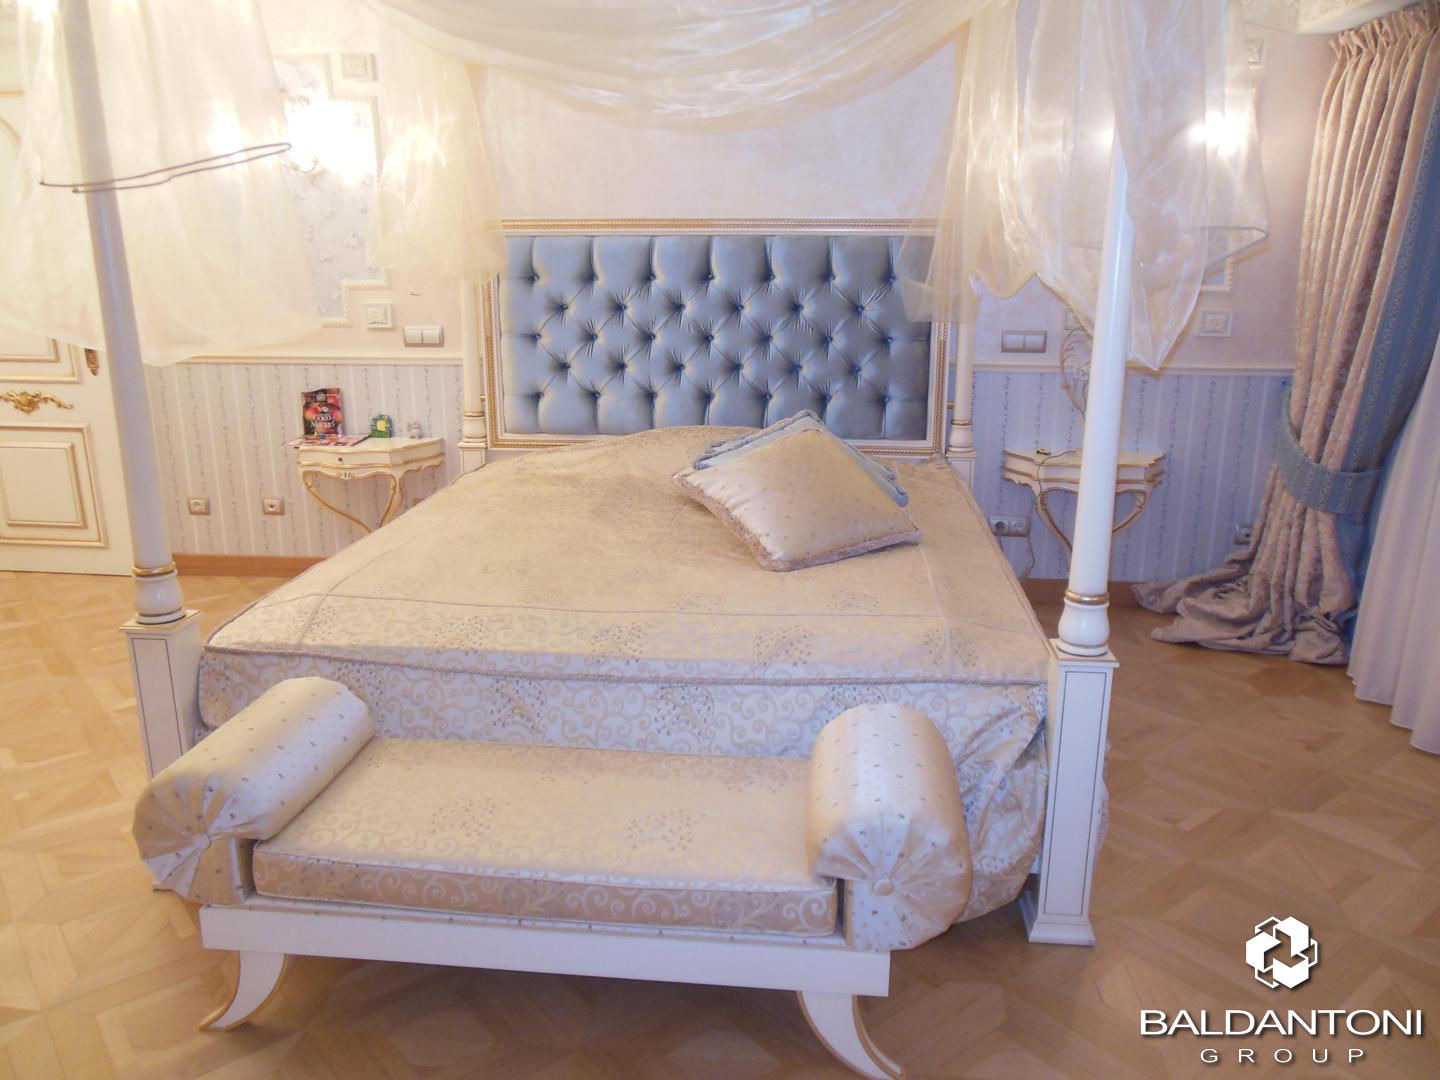 Camere da letto con testiera imbottita, Baldantoni Group Baldantoni Group Moderne slaapkamers Hout Hout